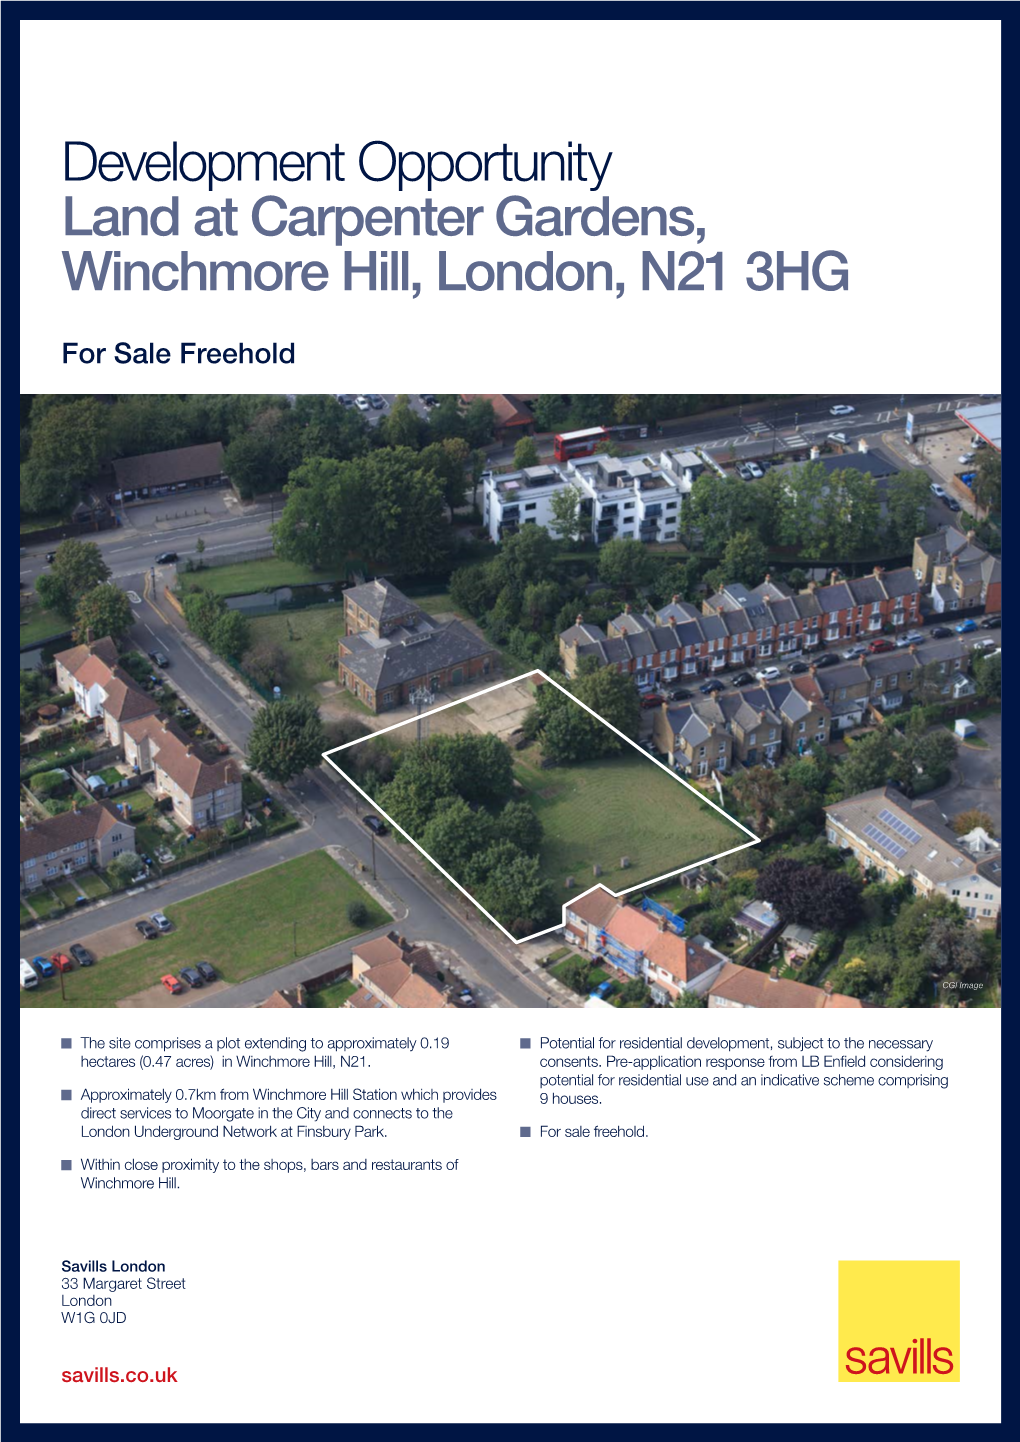 Development Opportunity Land at Carpenter Gardens, Winchmore Hill, London, N21 3HG